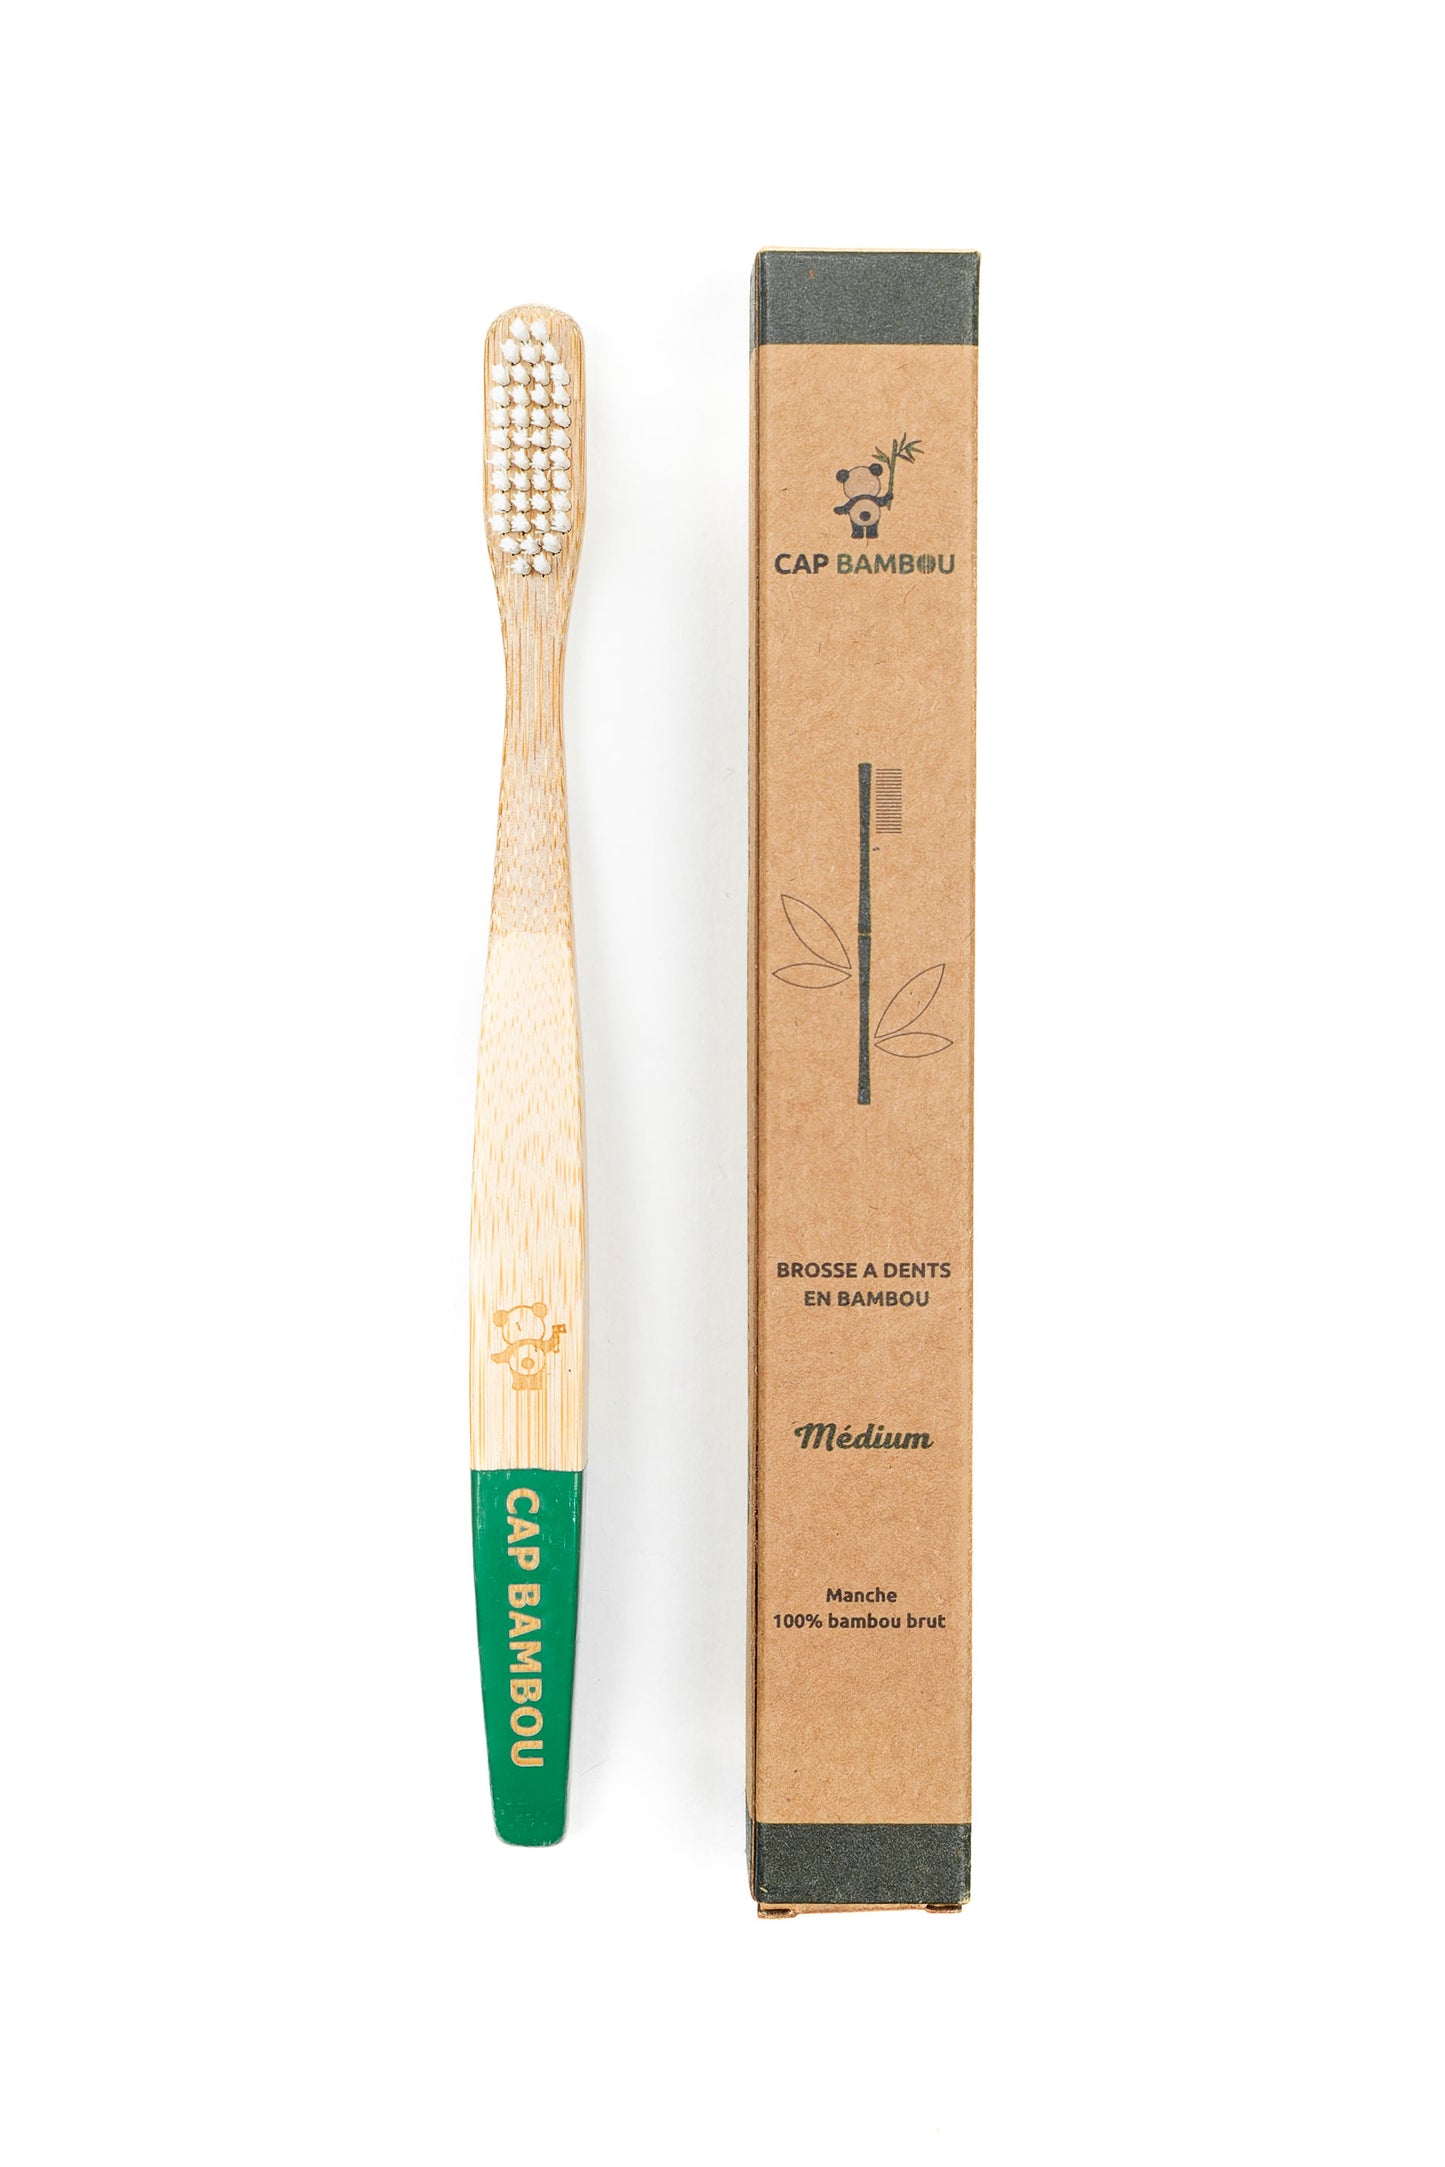 Cap Bambou -- Brosse à dents adultes poils medium x1